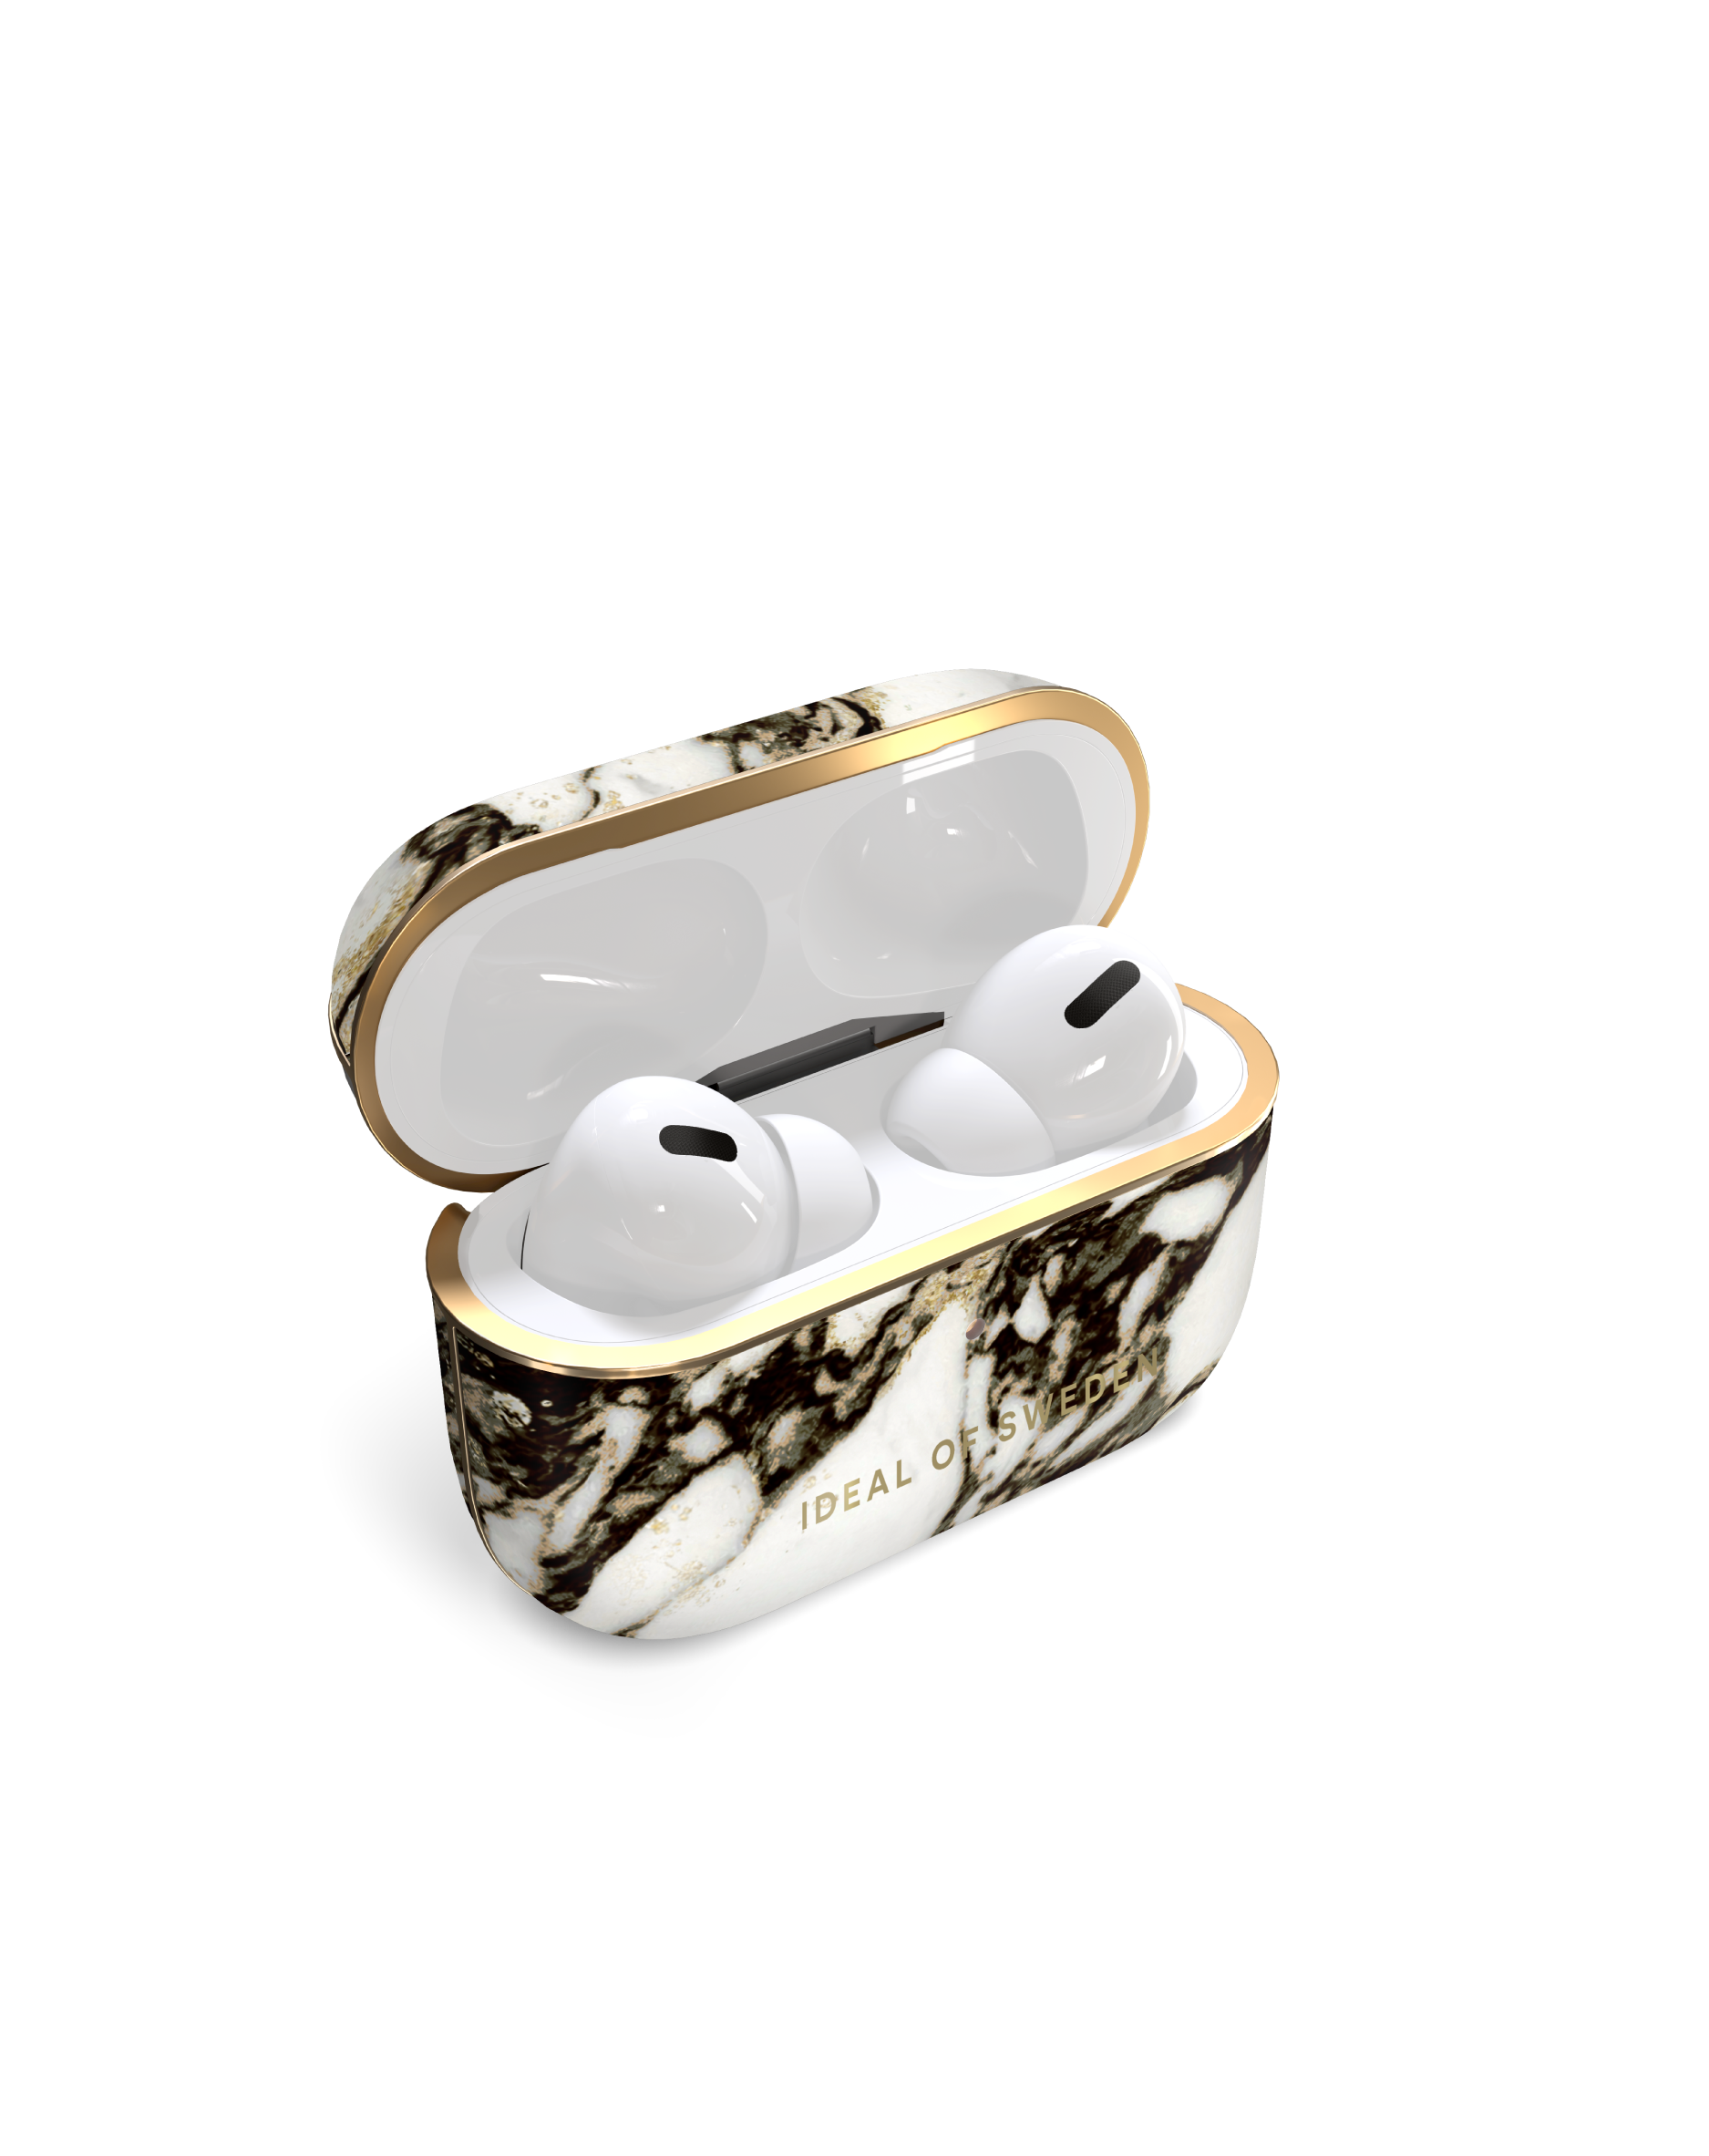 SWEDEN Calacatta für: Apple passend AirPod Cover OF IDFAPCMR21-PRO-380 IDEAL Case Golden Marble Full